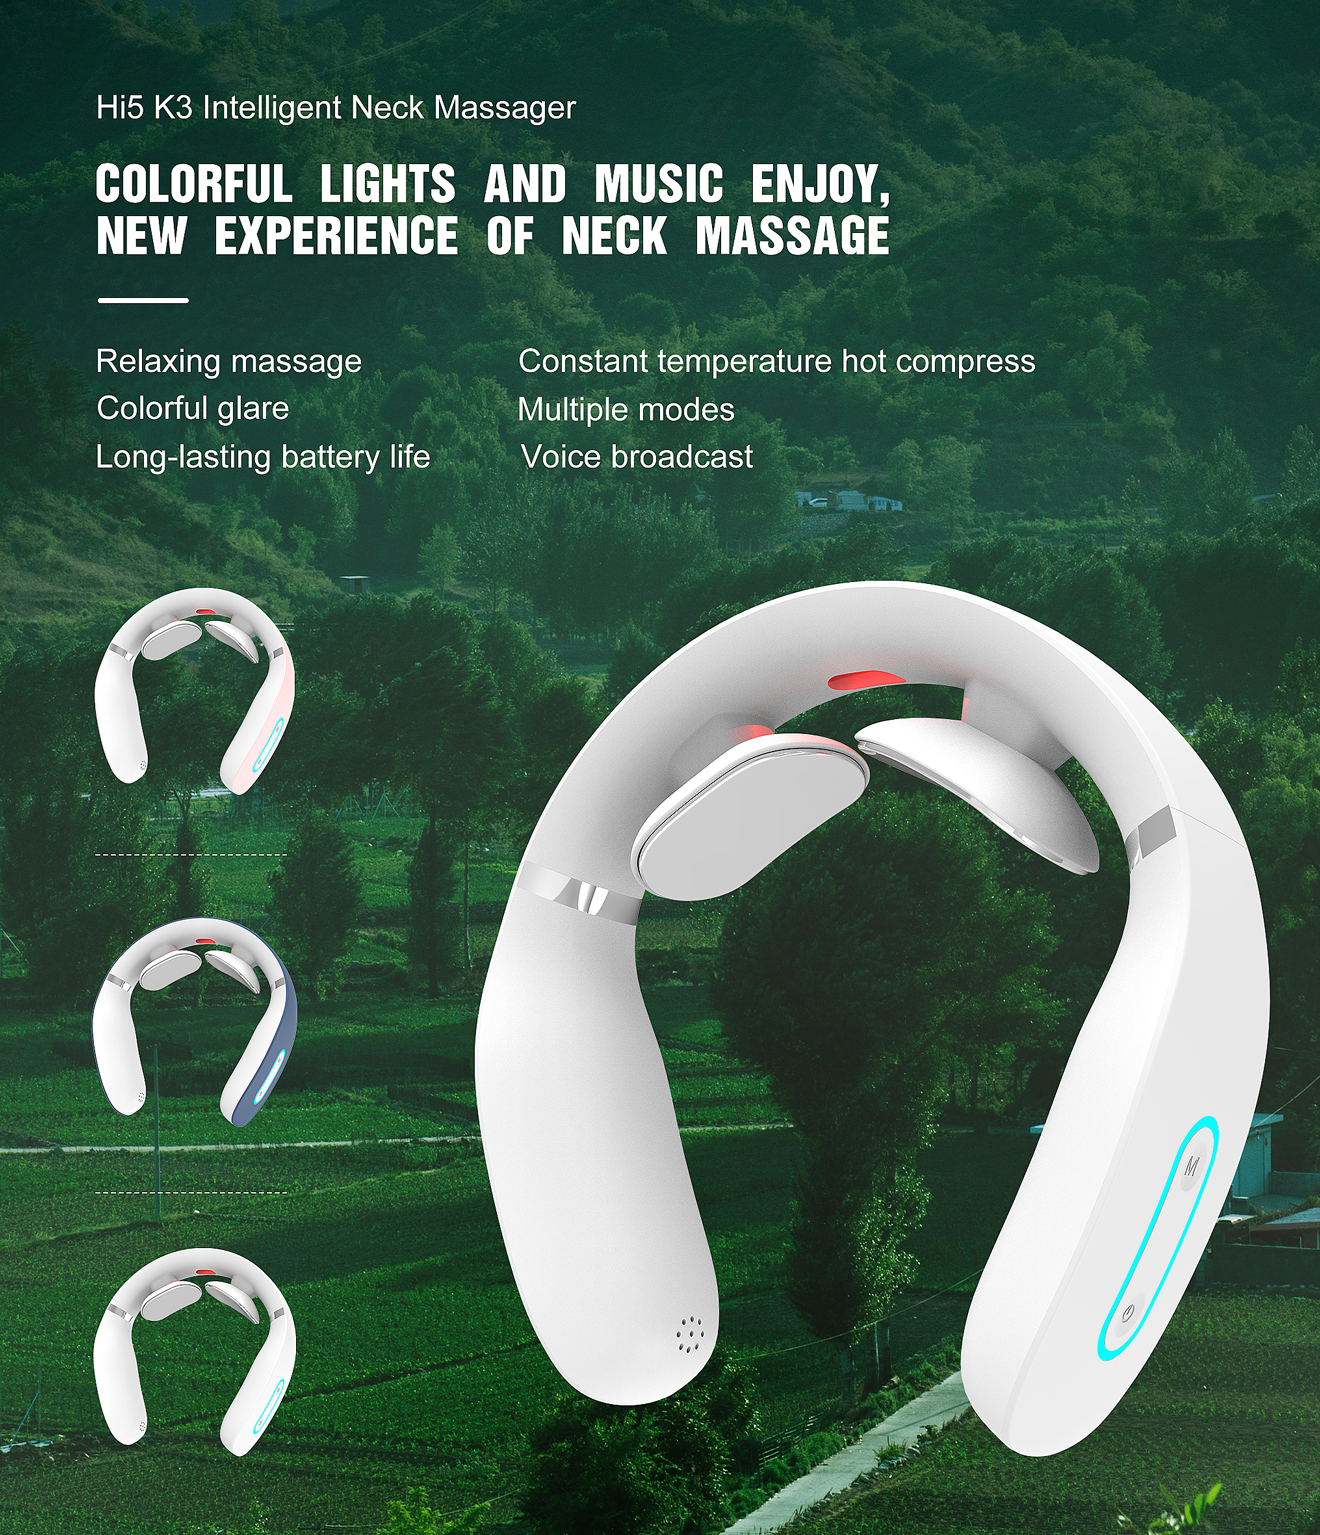 New product launch！Hi5 K3 Intelligent Neck Massager